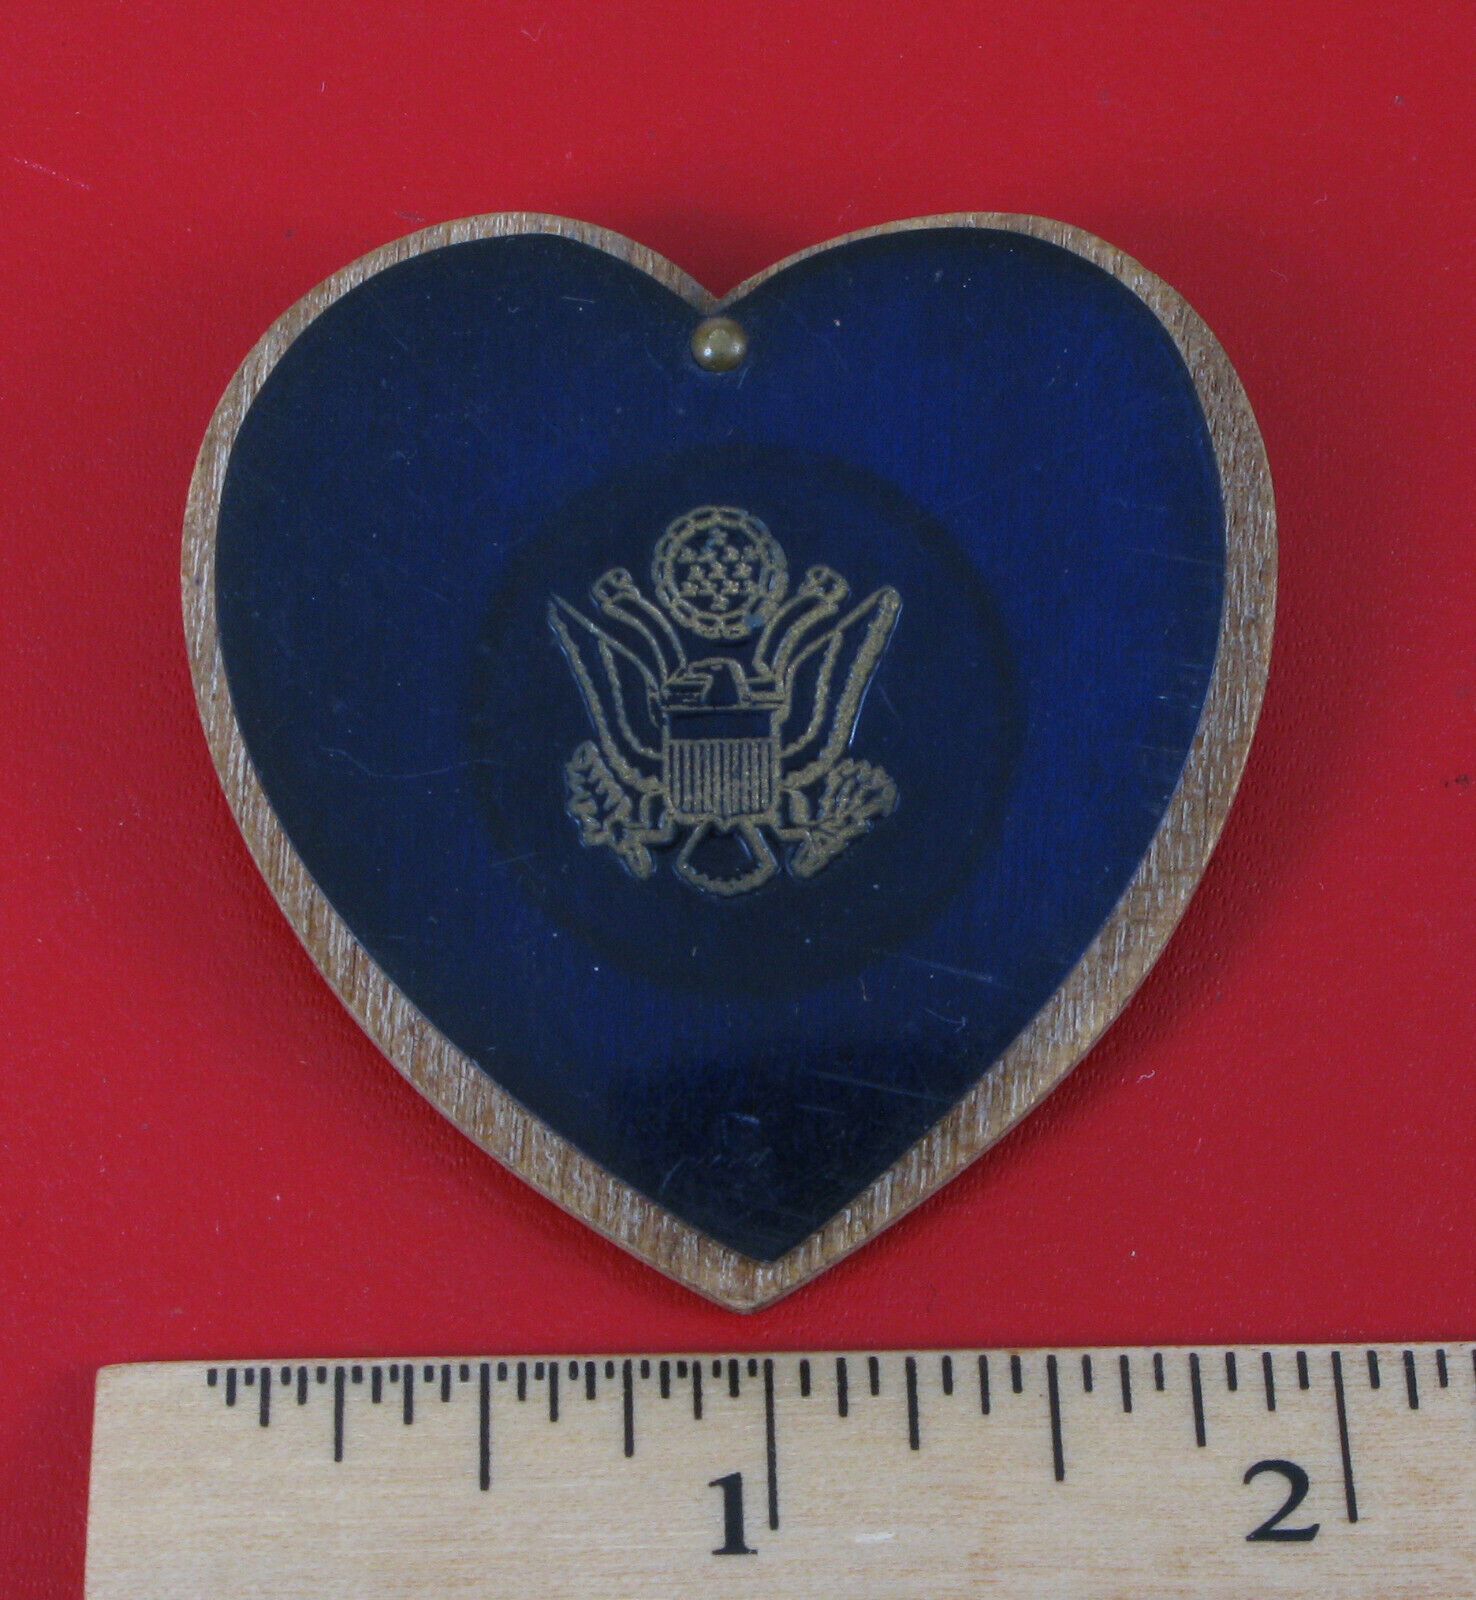  ORIGINAL WWII ARMY SWEETHEART HEART BROOCH PIN 